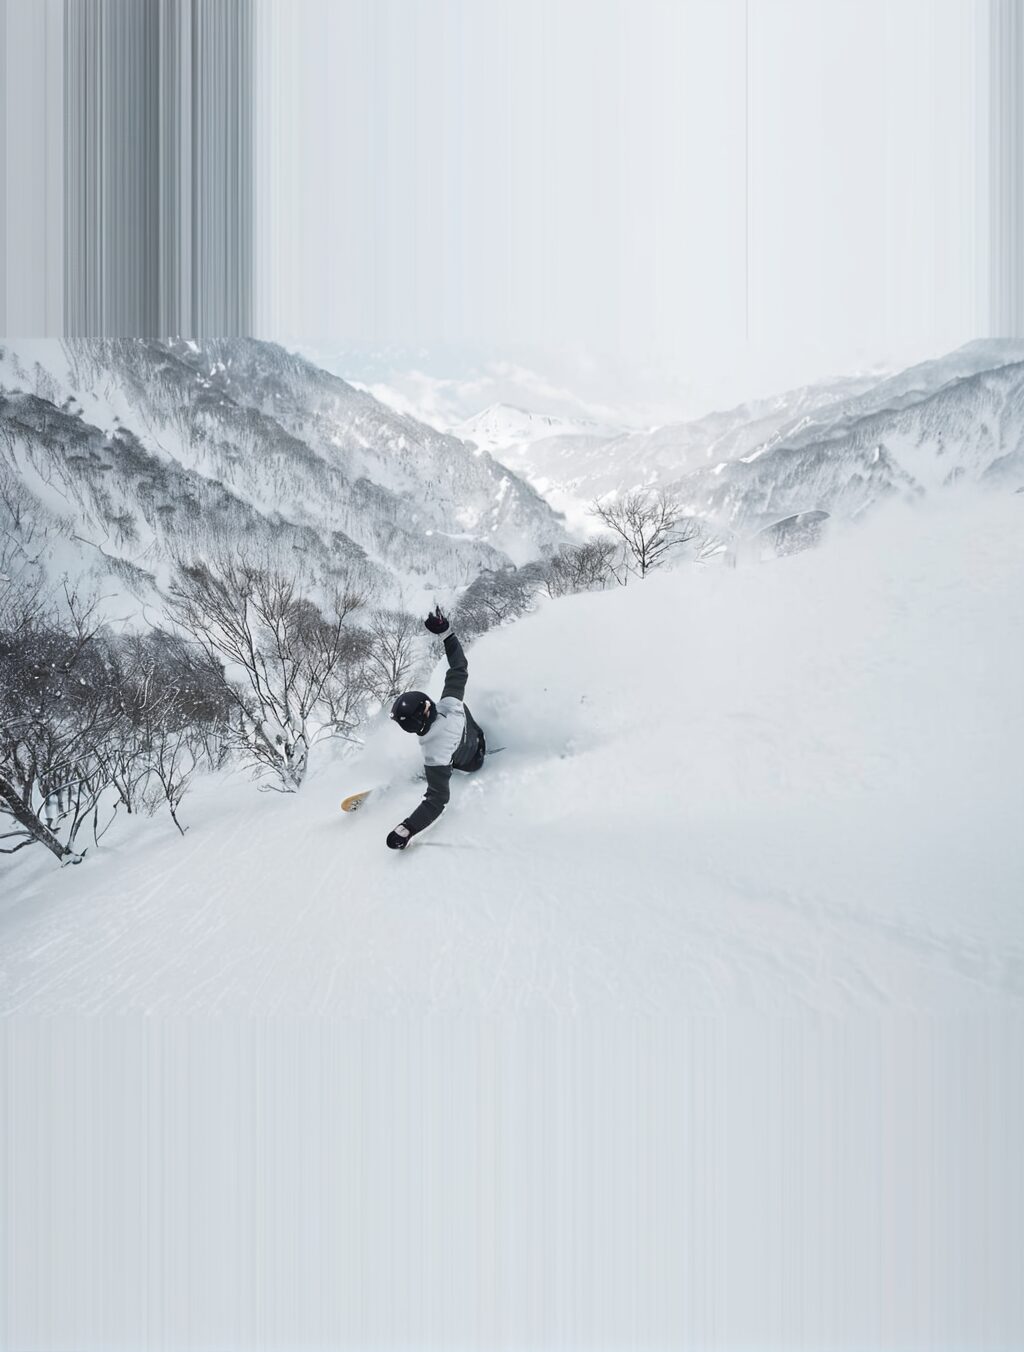 snowboarding trips to japan